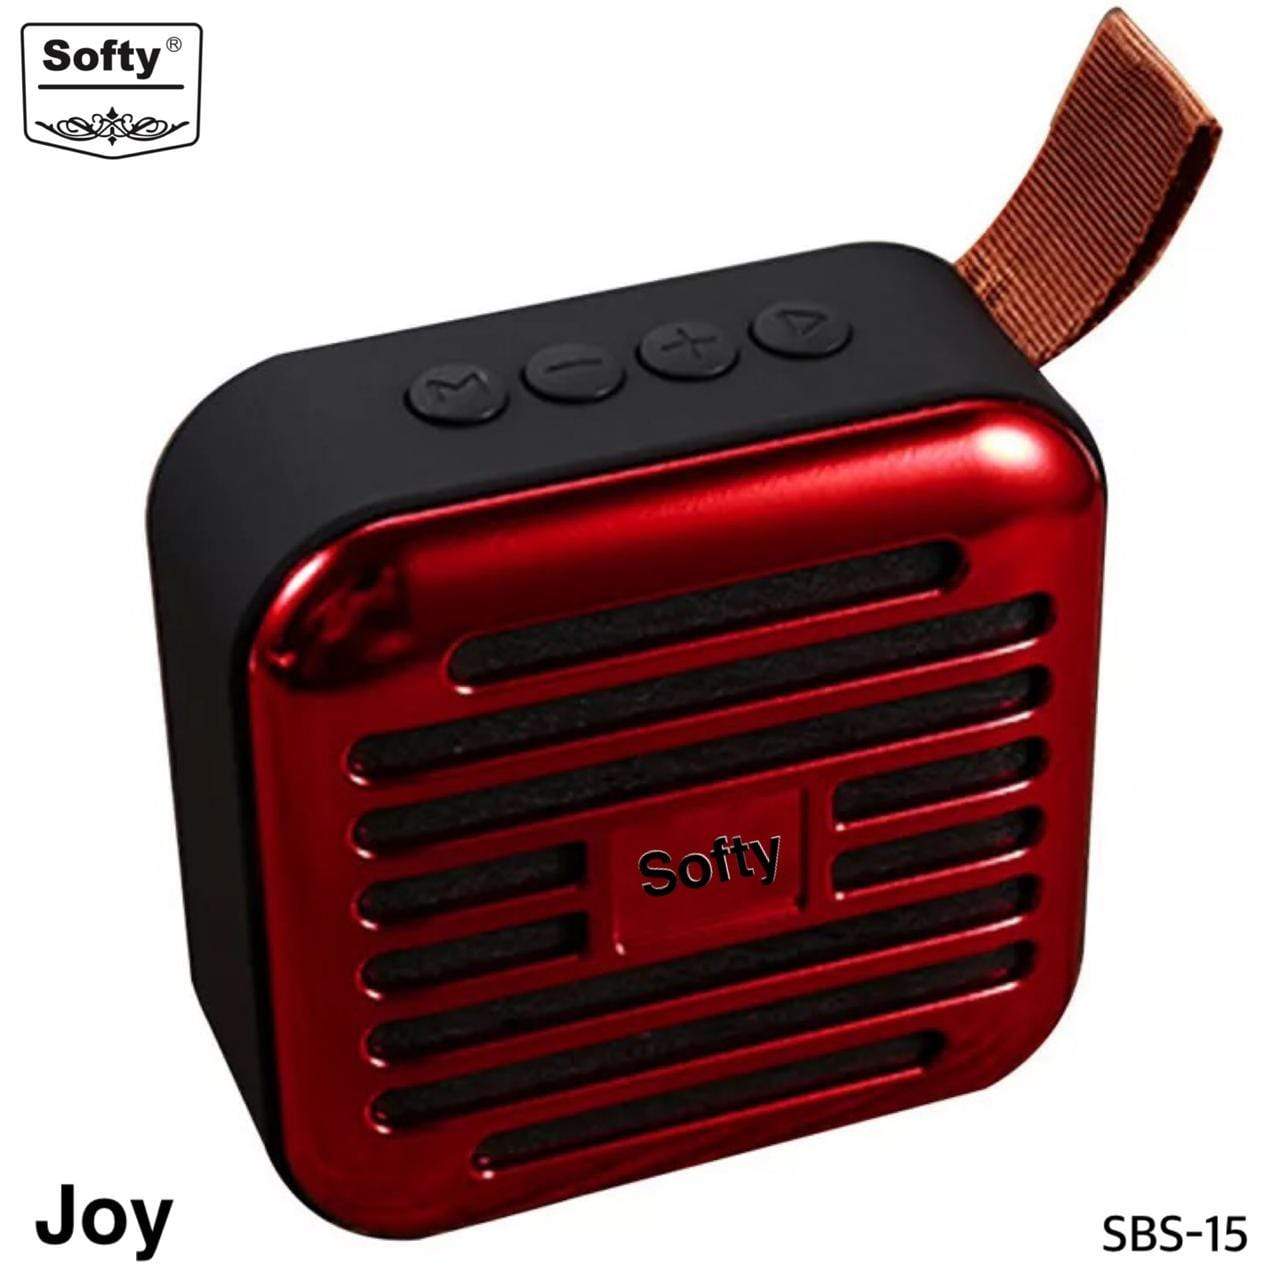 Softy premium quality Bluetooth speaker Joy-BLUETOOTH SPEAKERS-dealsplant